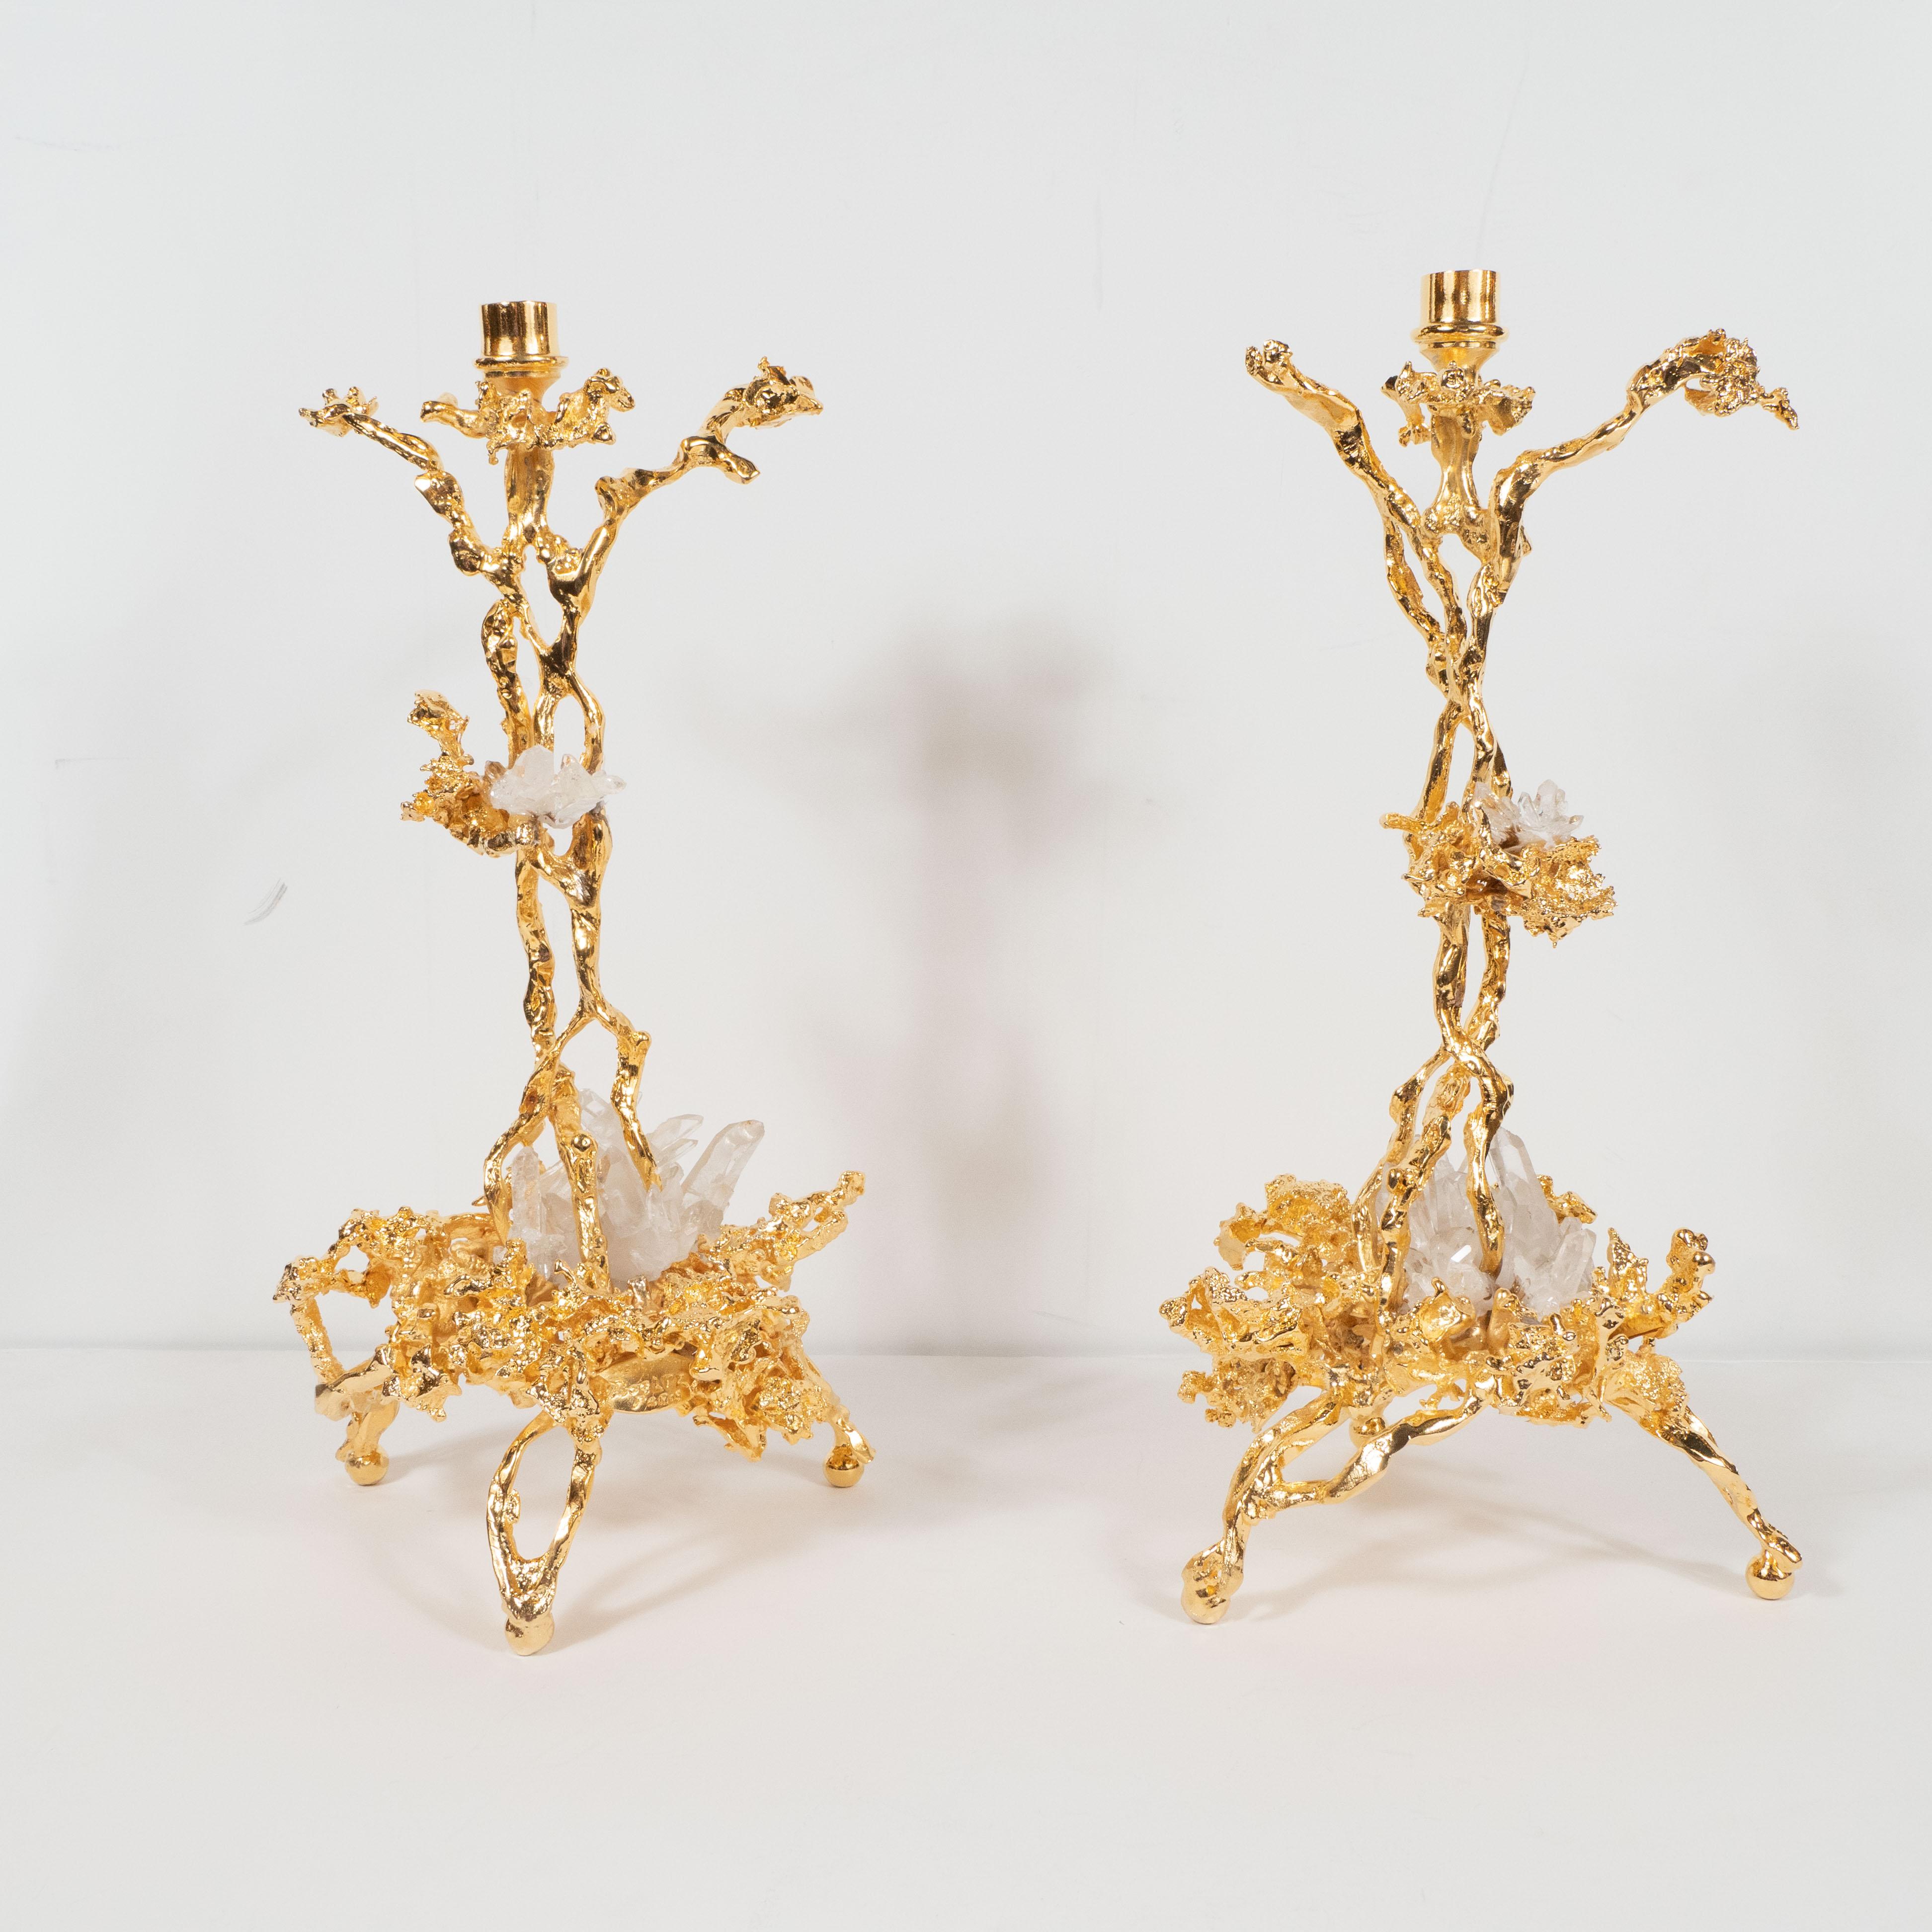 Pair of Branch Form 24-Karat Gilded Bronze Candlesticks by Claude Boeltz 1